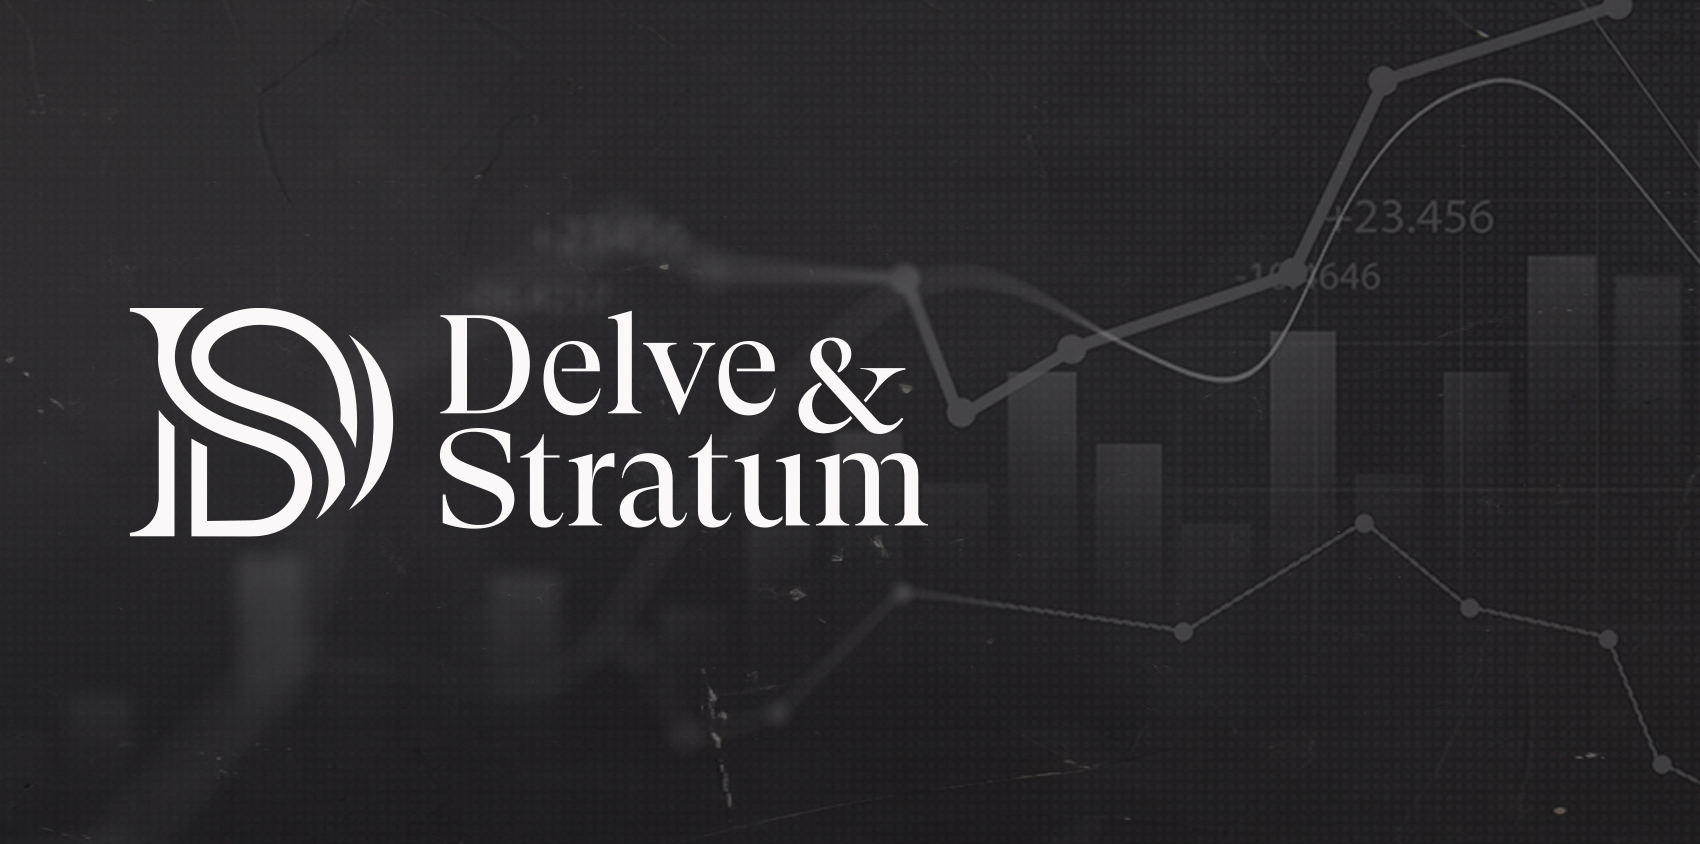 delve & stratum case study banner